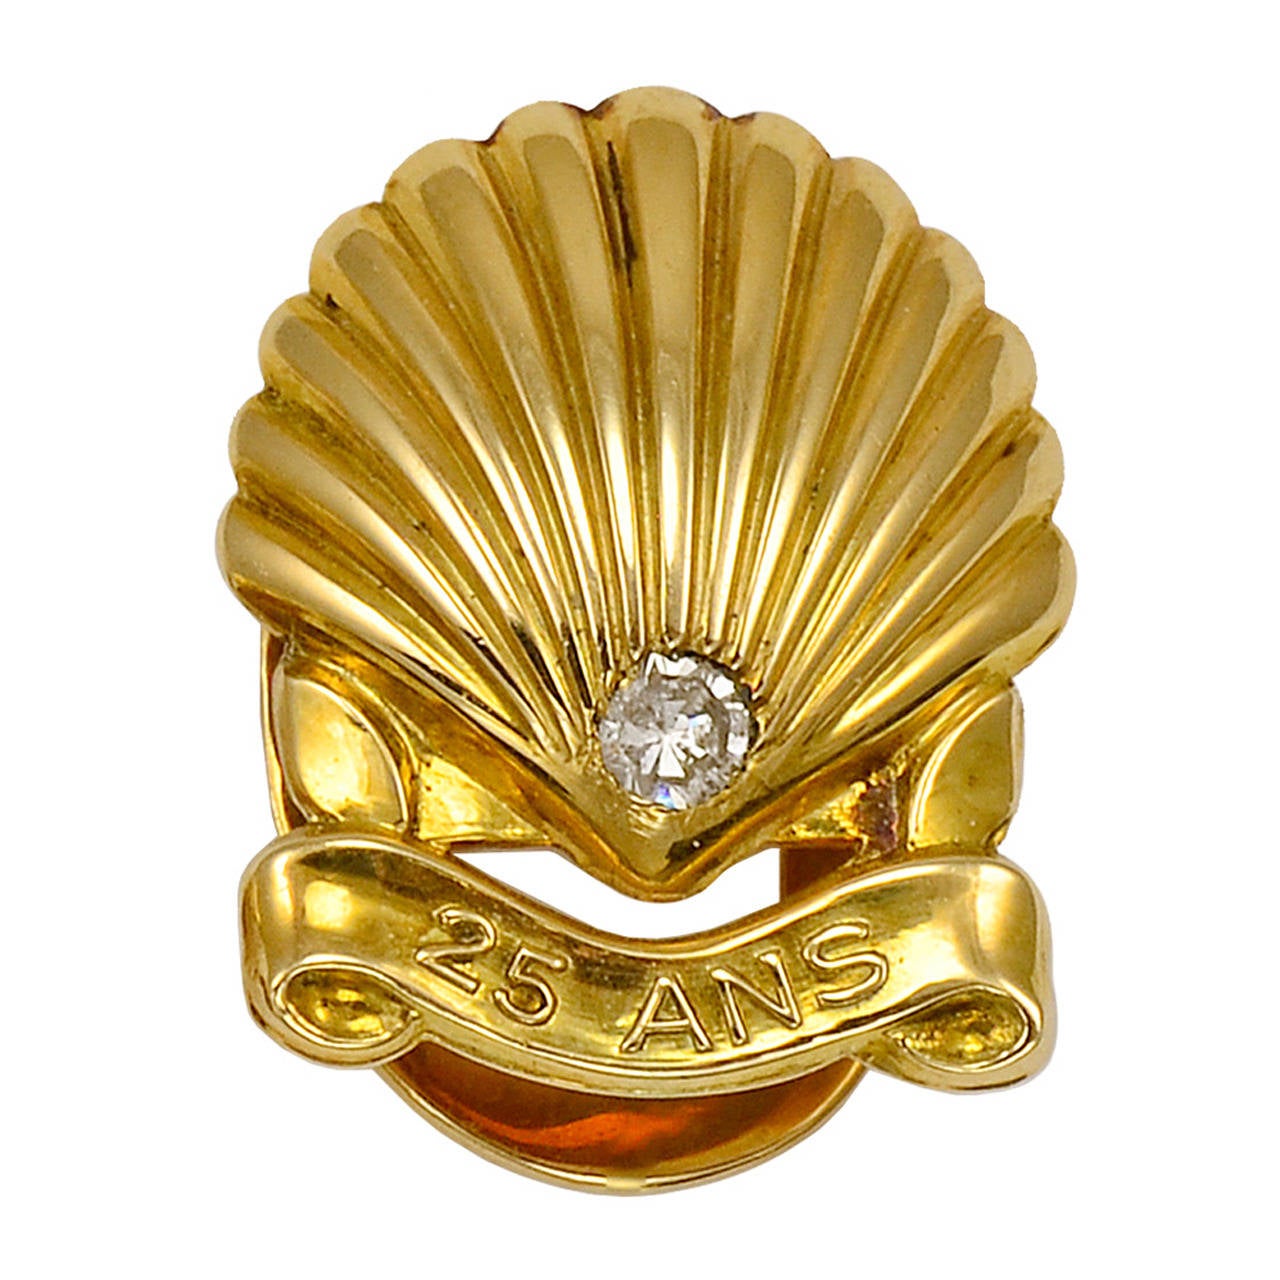 Cartier Paris Gold "25 ANS" Service Award